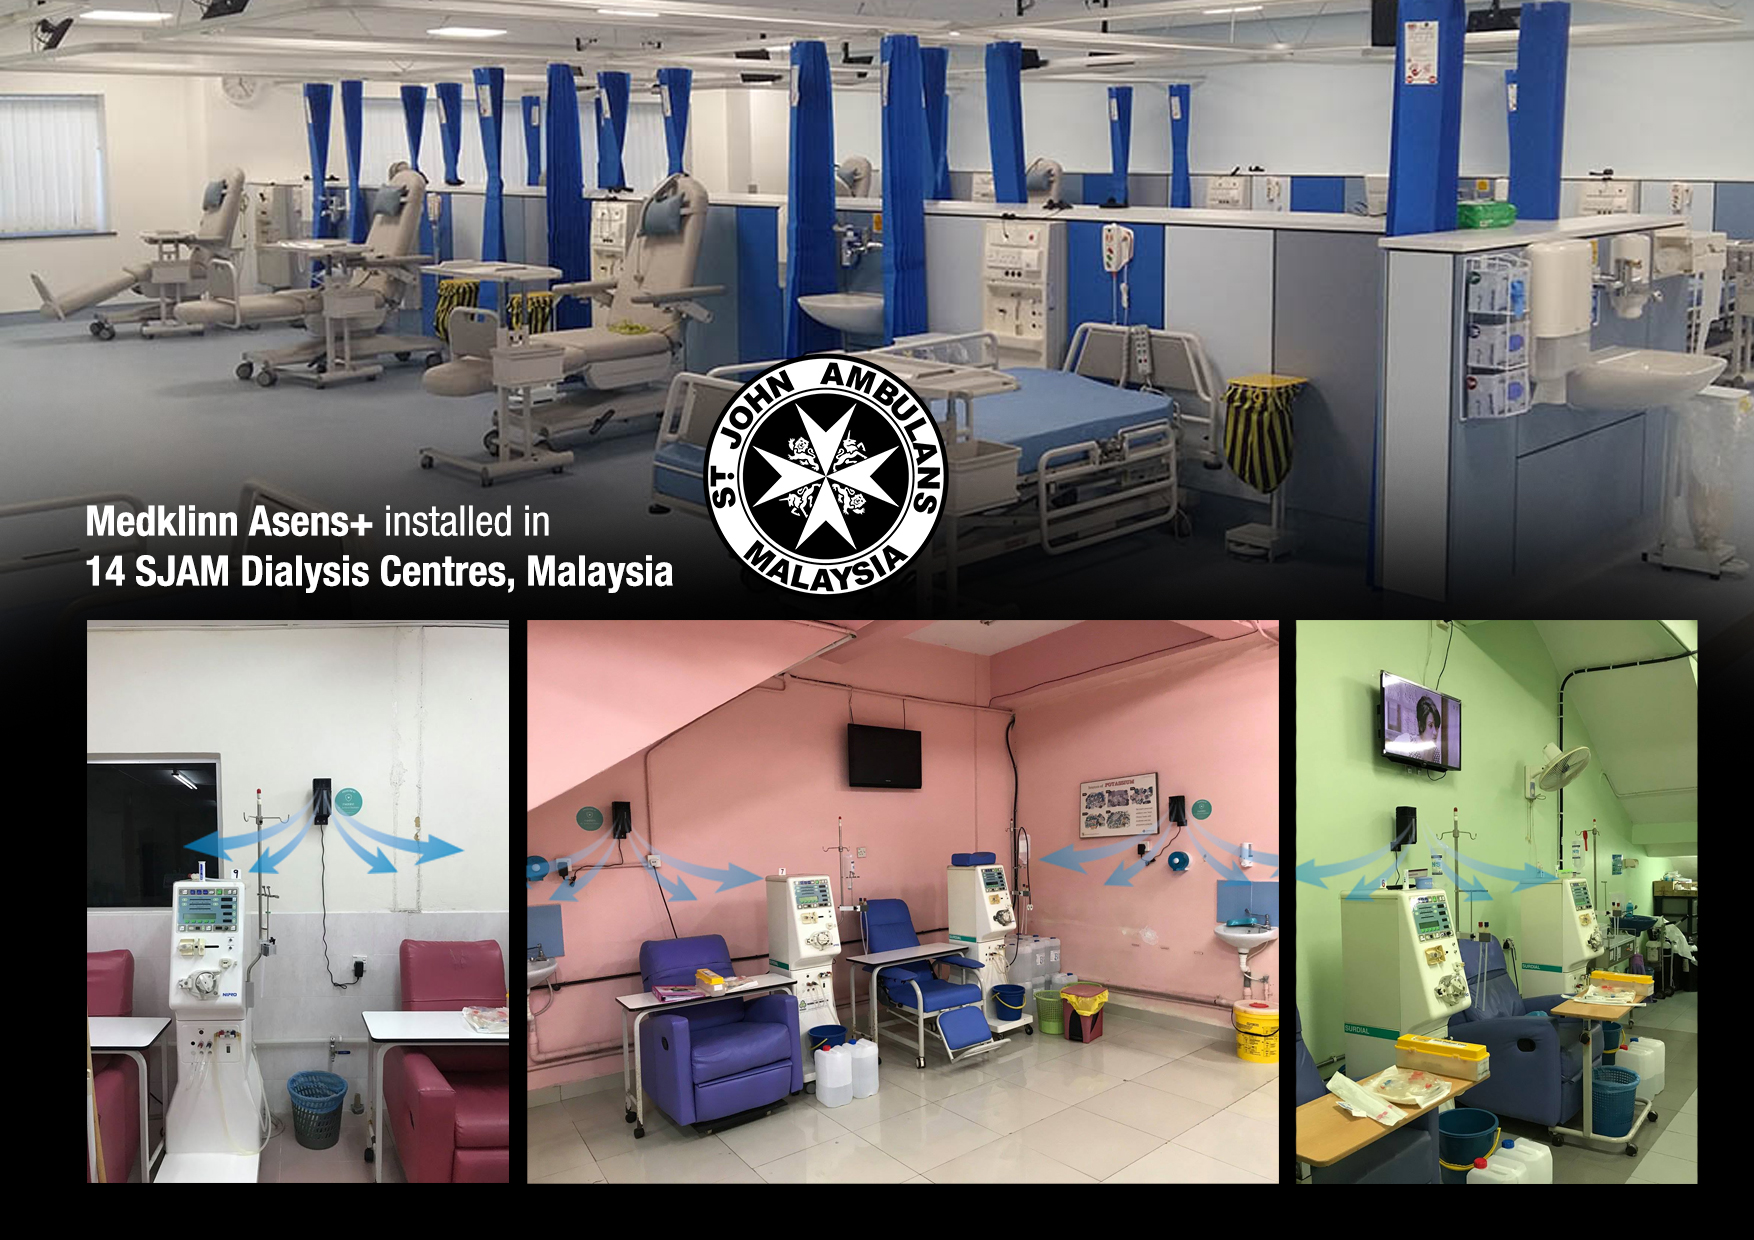 SJAM Dialysis Centres